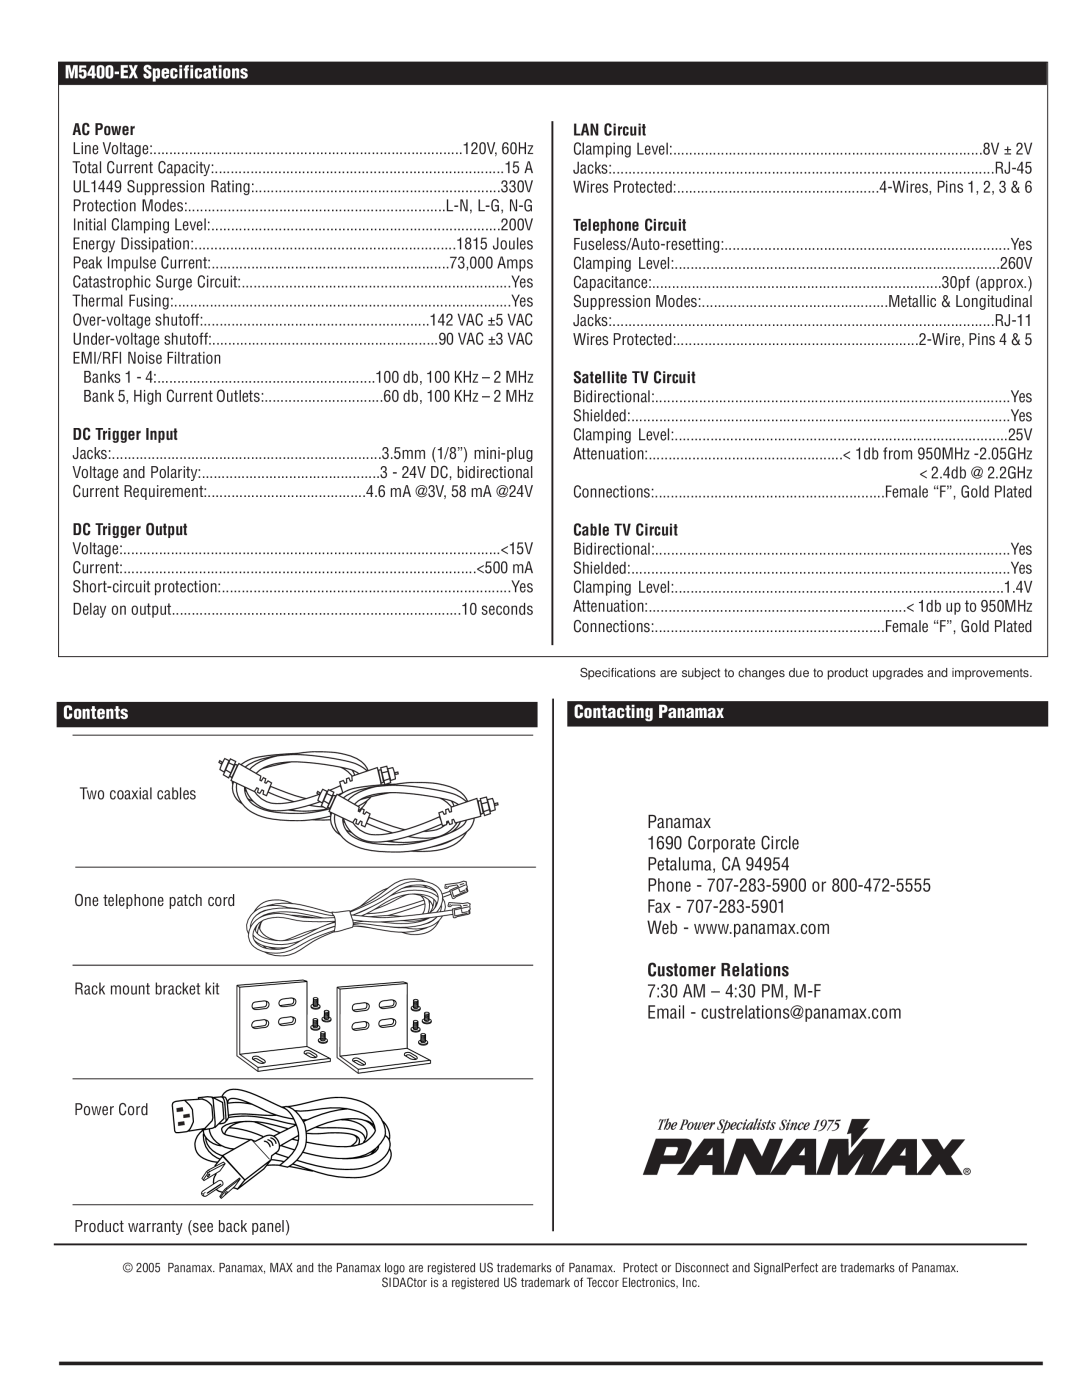 Panamax M5400-EX Specifications, Contents, Contacting Panamax, Panamax 1690 Corporate Circle Petaluma, CA, AC Power 